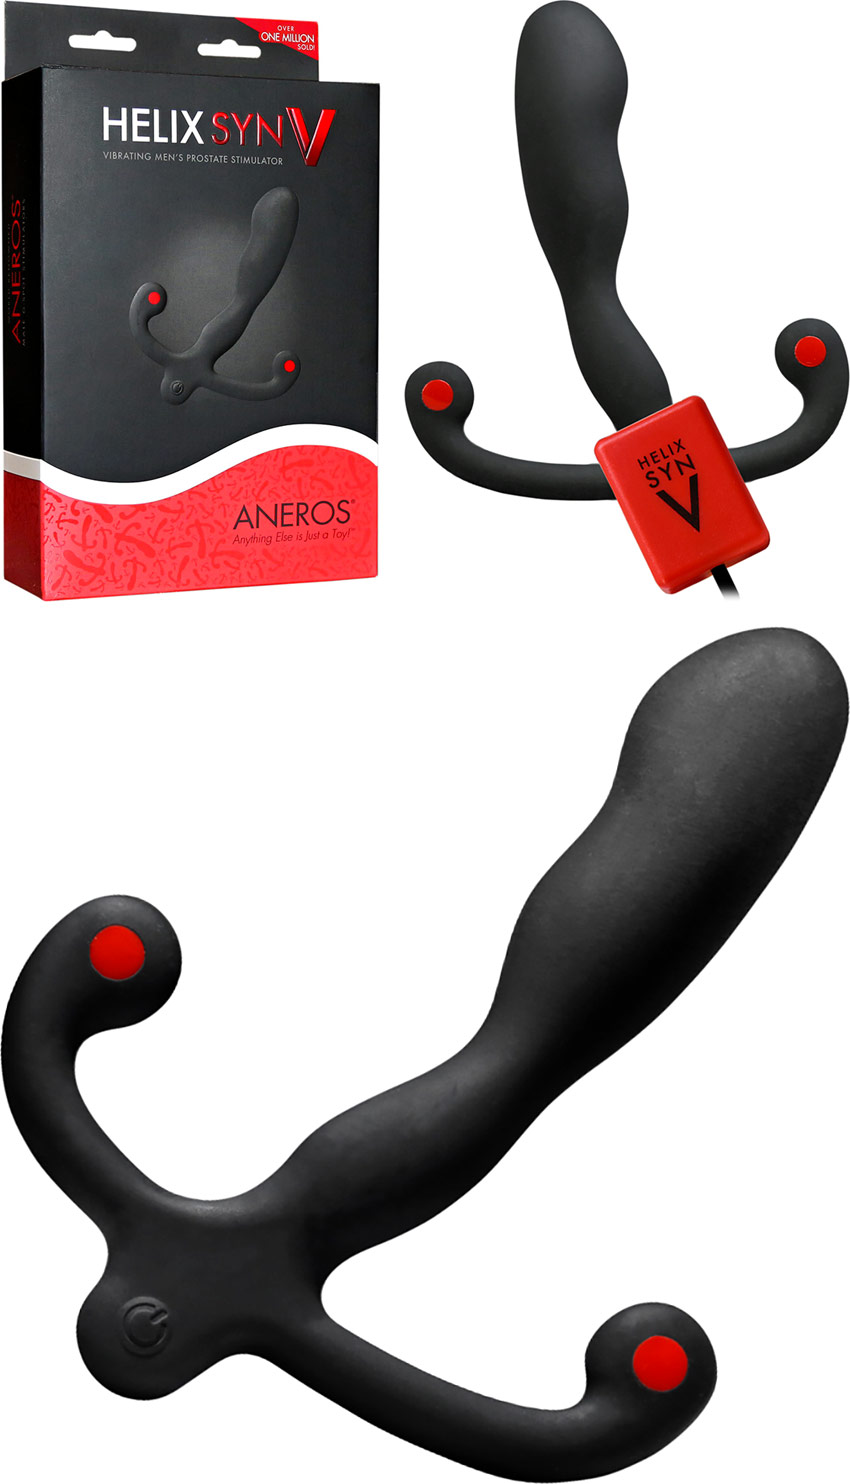 Aneros Helix Syn V vibrating prostate stimulator